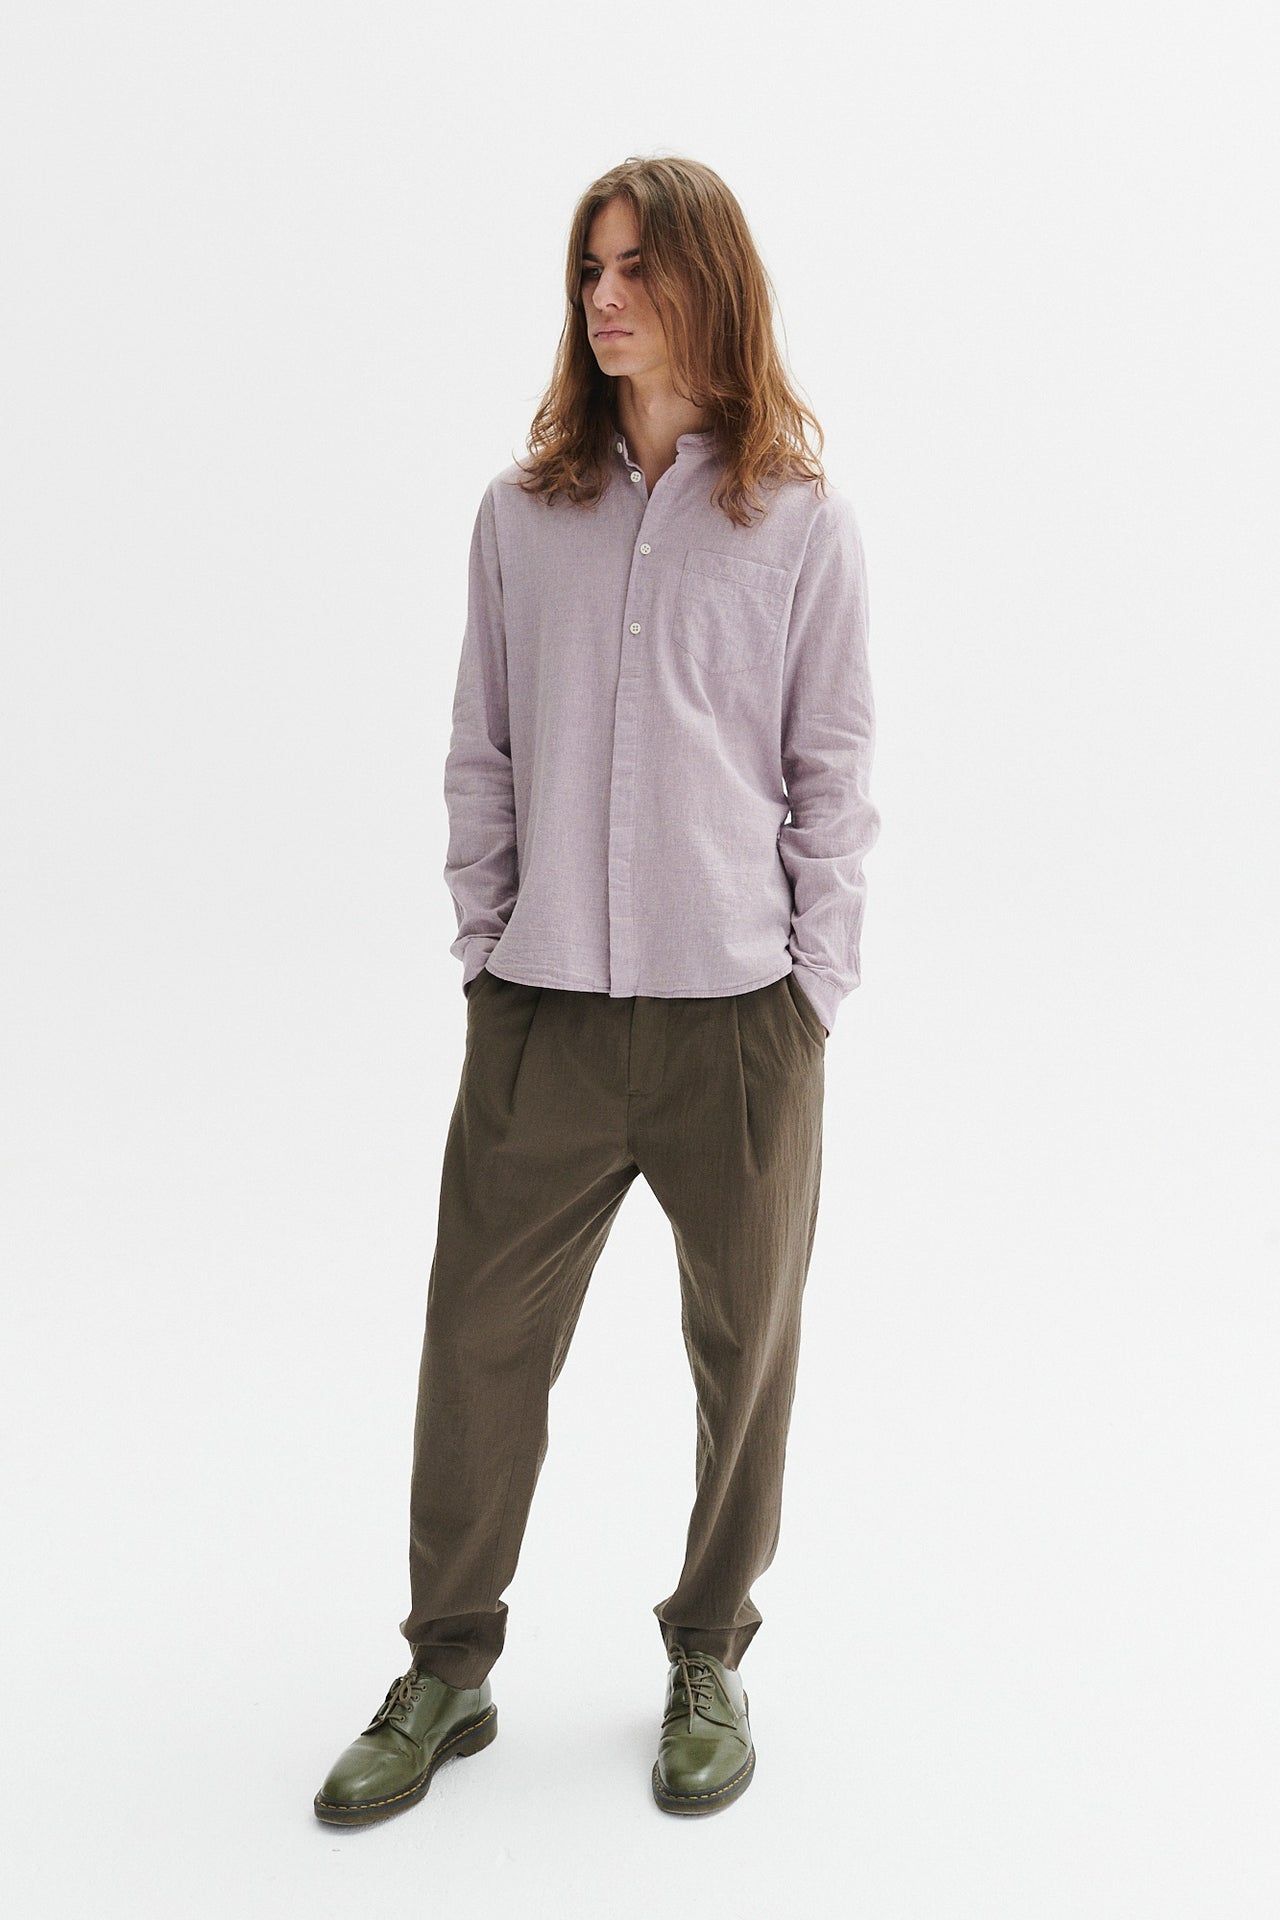 Zen Shirt in a Purple Heather Japanese Organic Cotton and Linen